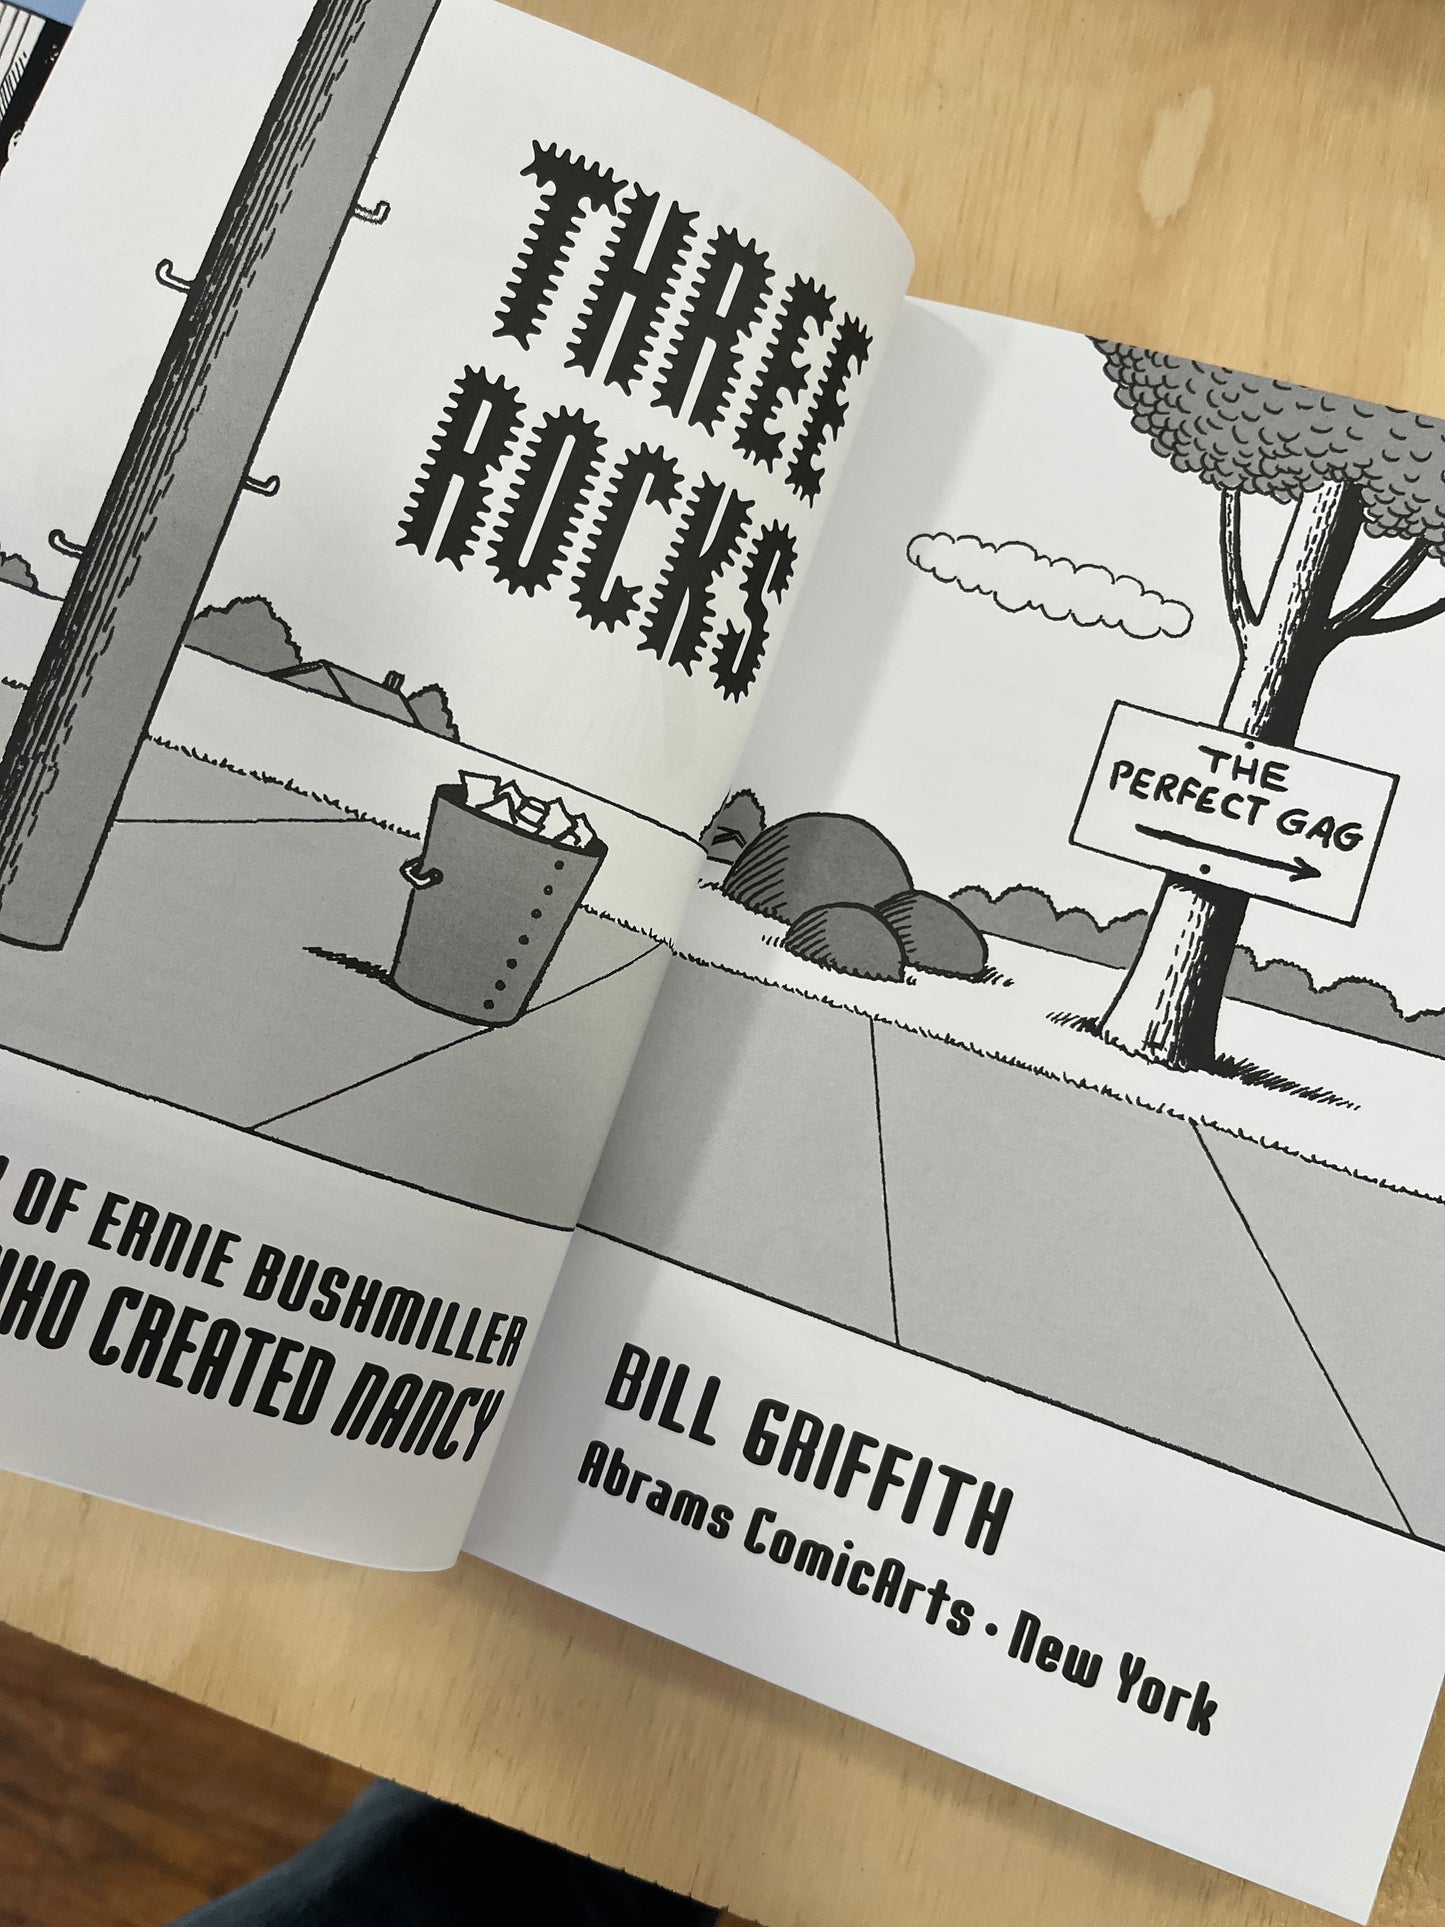 Three Rocks: The Story of Ernie Bushmiller the Man Who Created Nancy